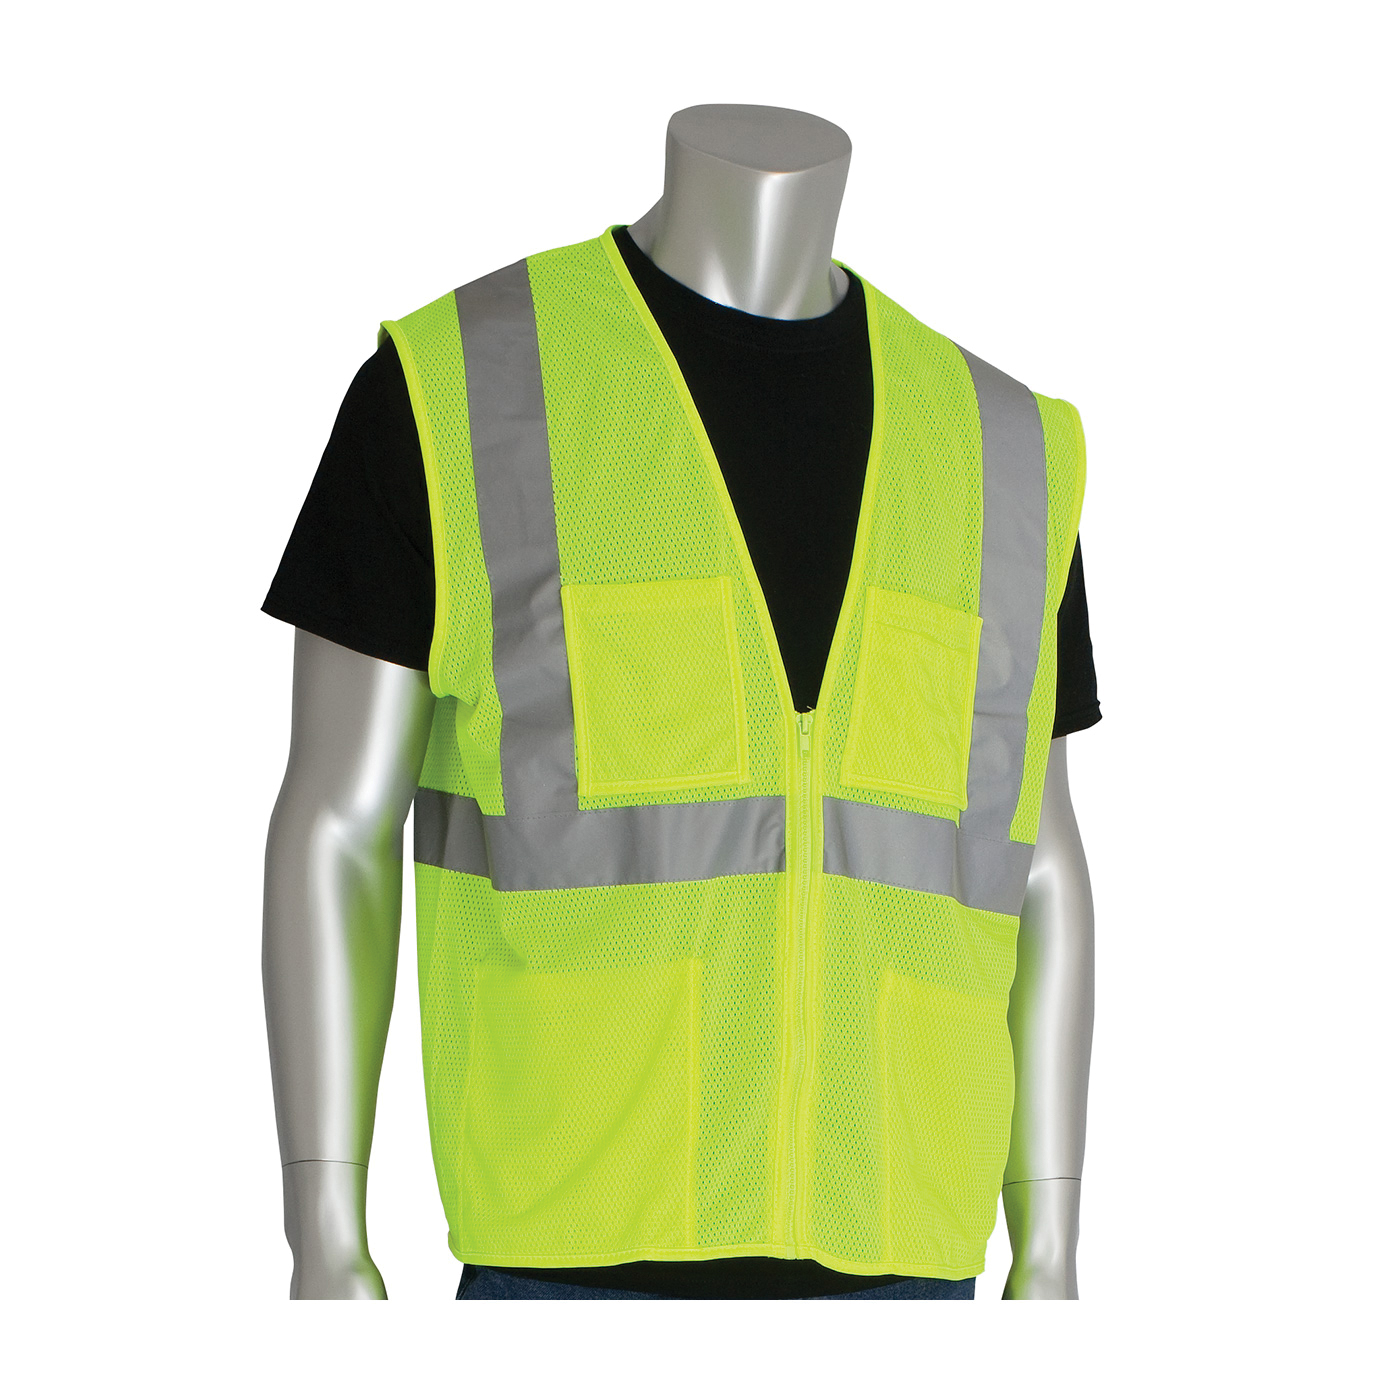 PIP® 302-MVGZ4PLY-5X Safety Vest, 5XL, Hi-Viz Lime Yellow, Polyester Mesh, Zipper Closure, 4 Pockets, ANSI Class: Class 2, Specifications Met: ANSI 107 Type R